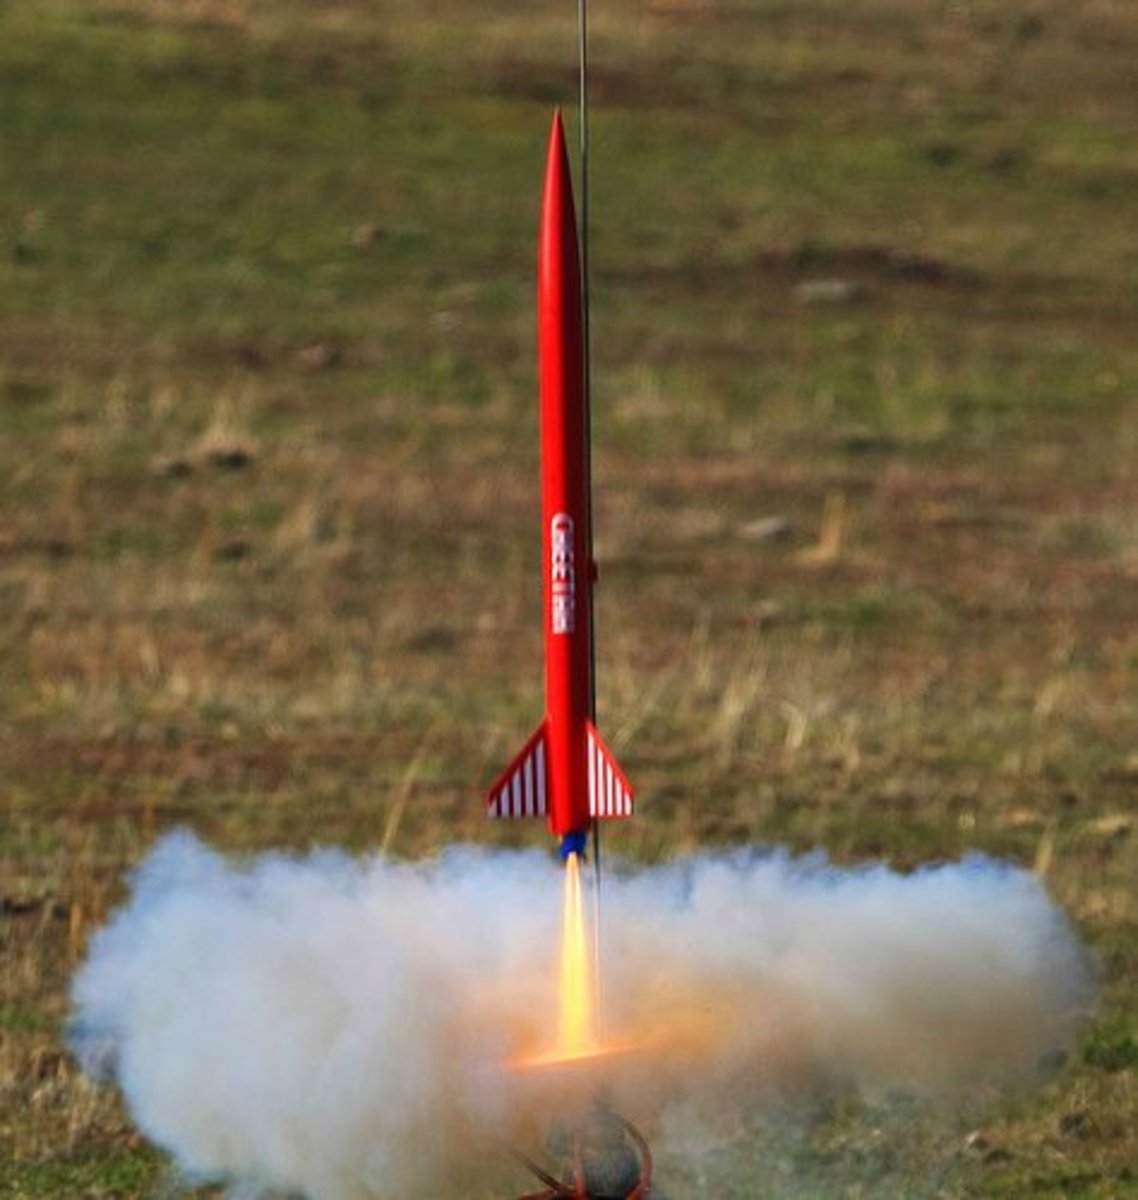 model-rockets-are-fun